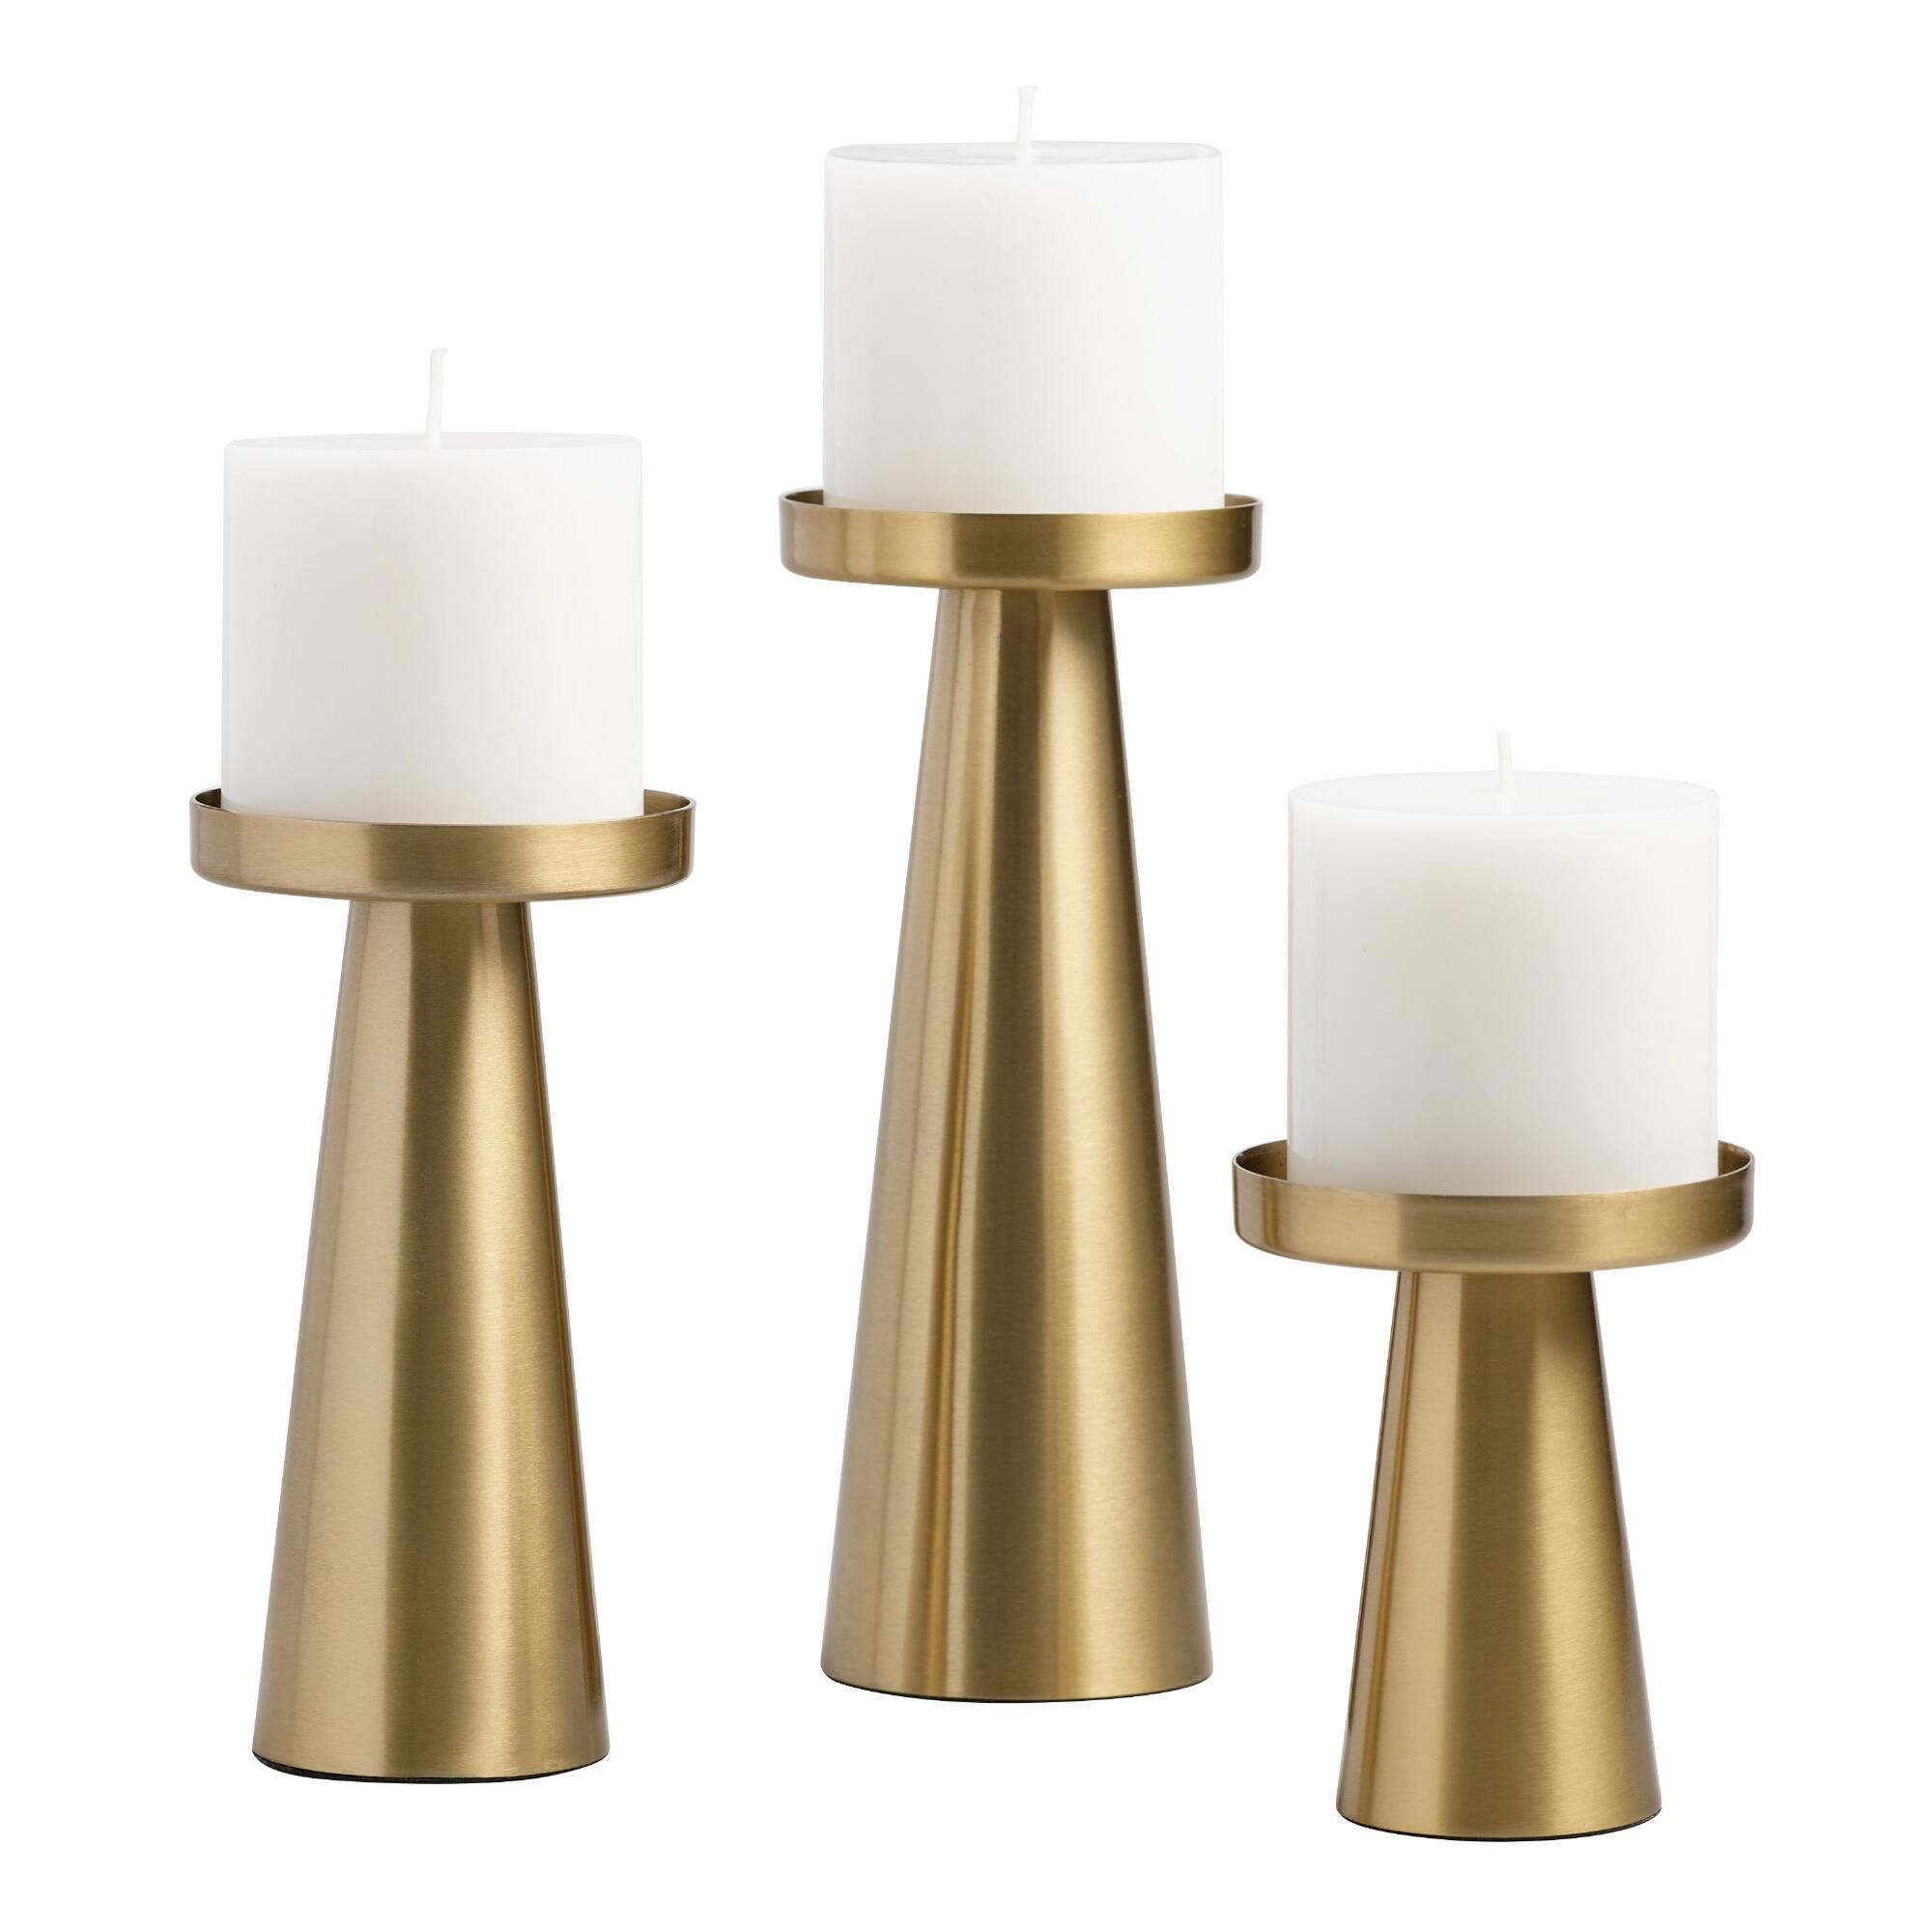 Brushed Gold Metal Contemporary Pillar Candleholder - Medium by World Market Medium | World Market